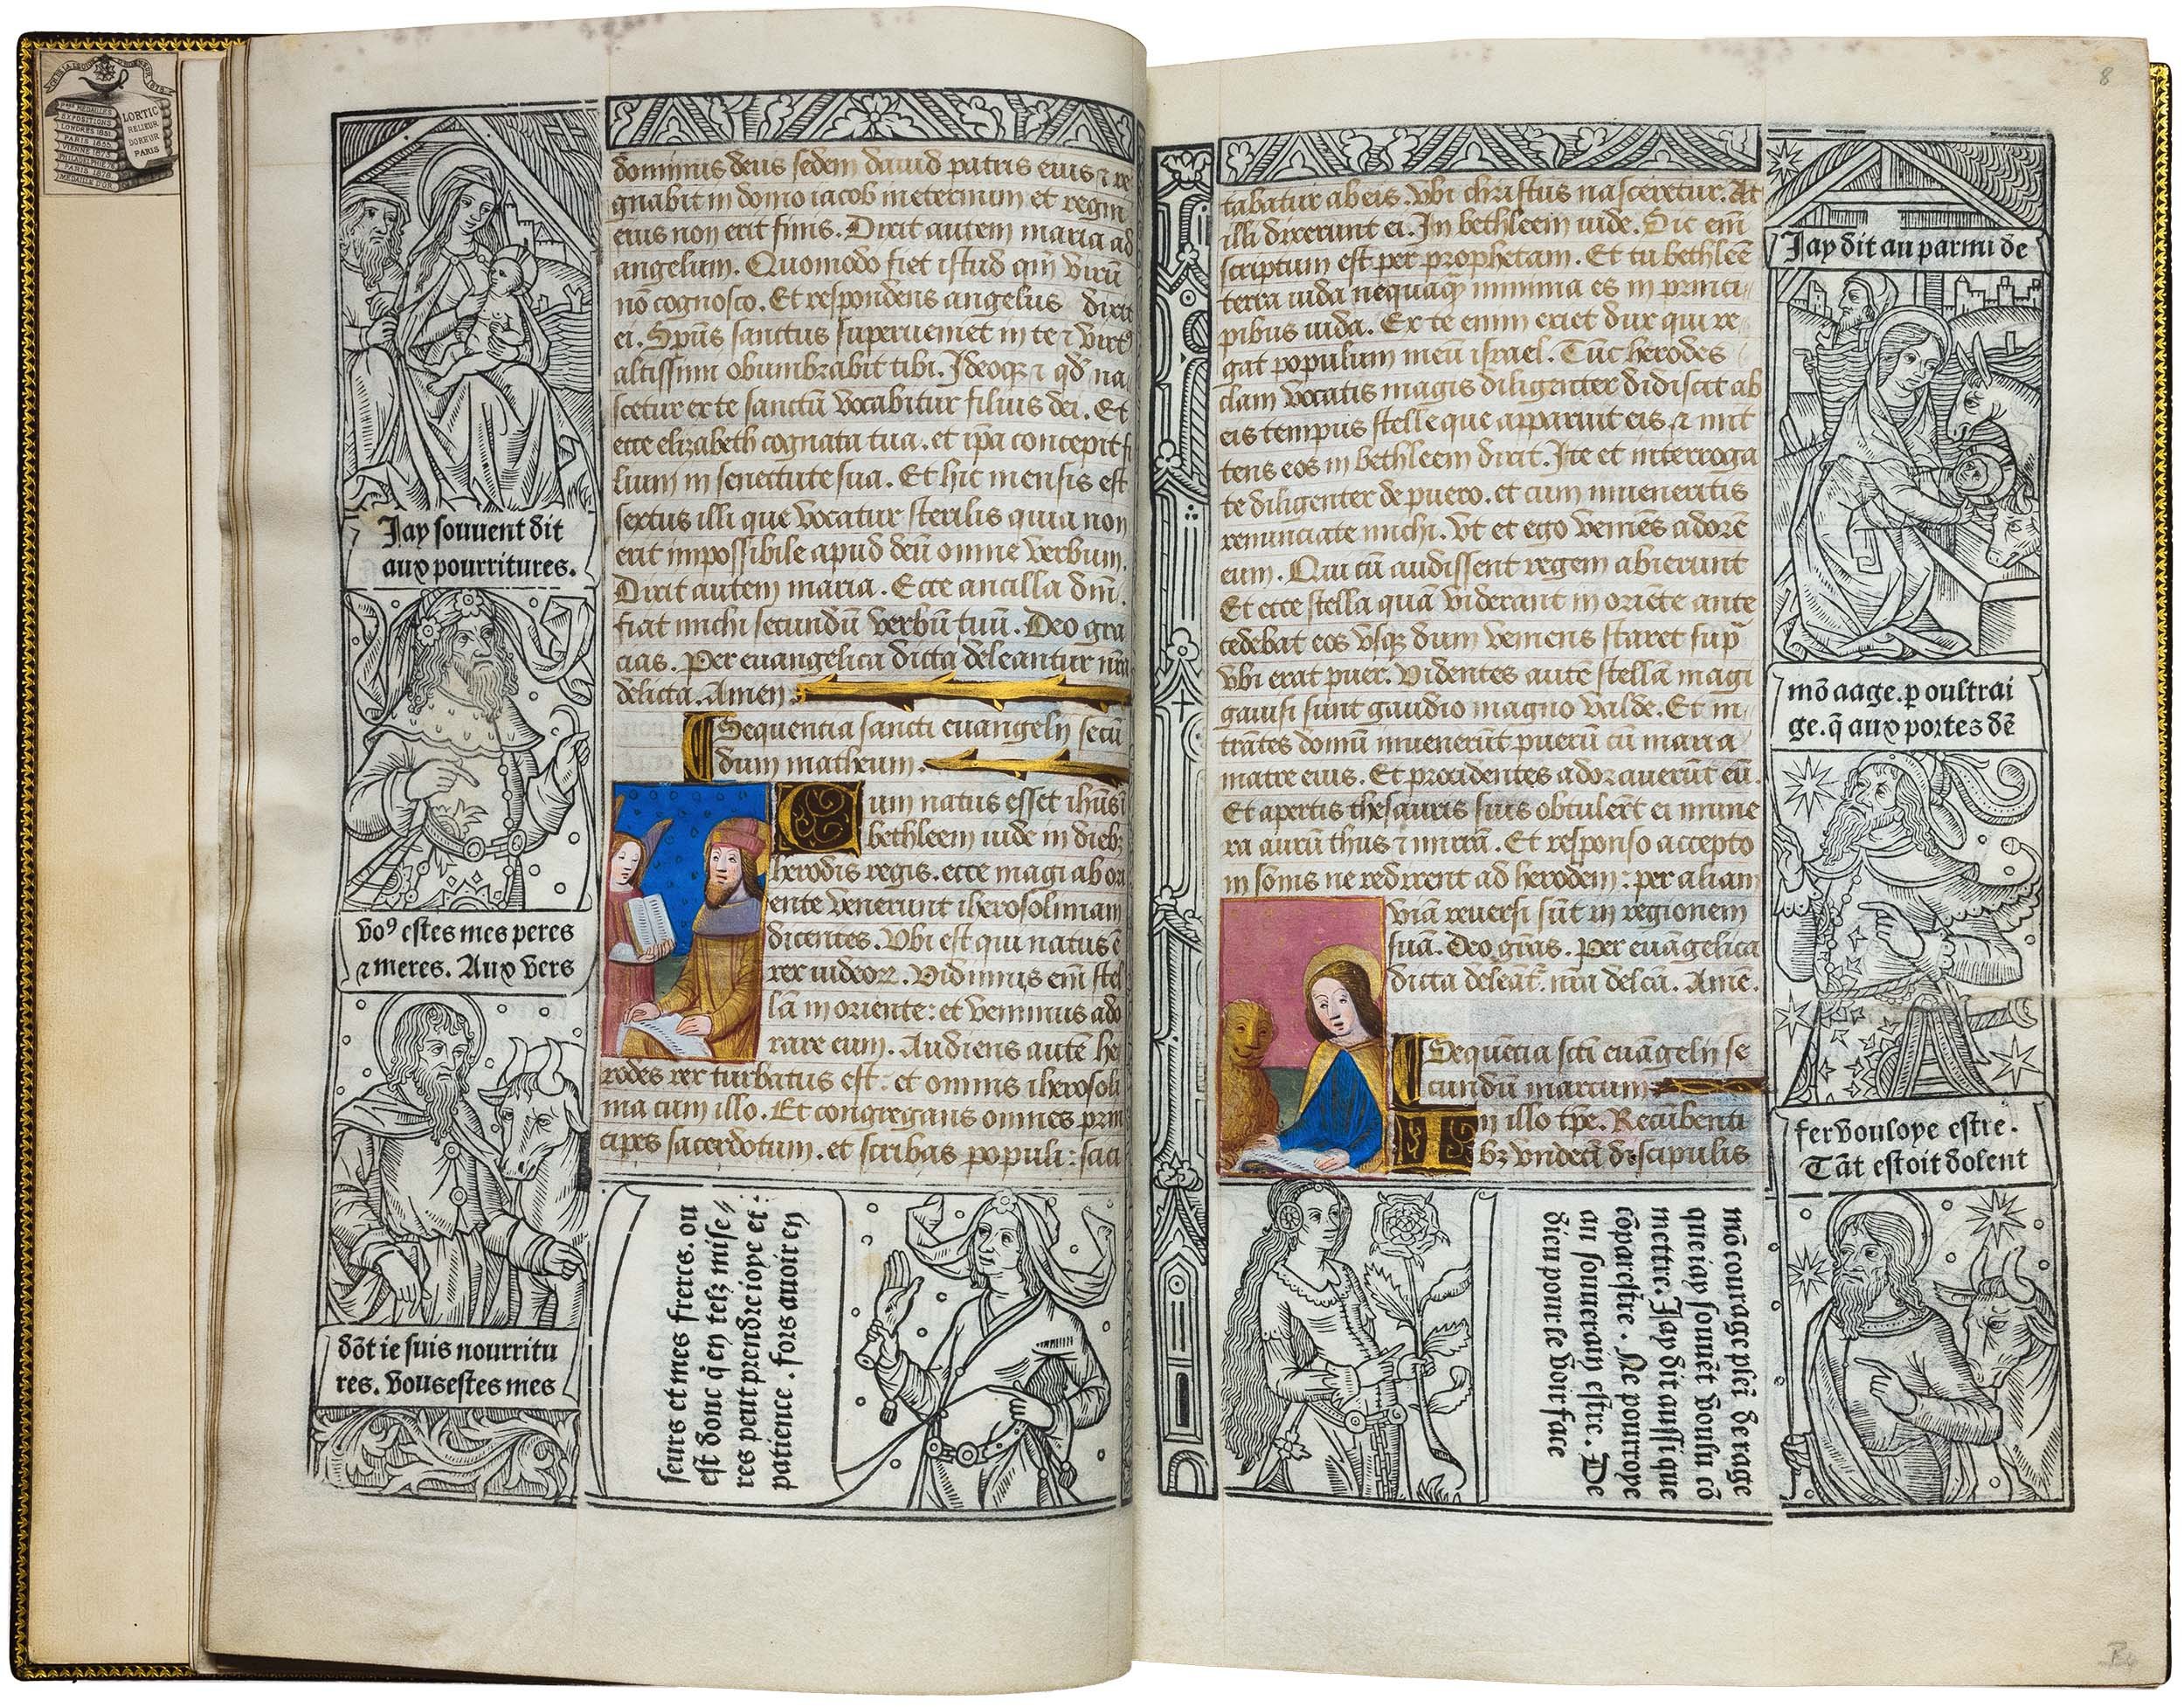 horae-bmv-20.8.1490-printed-book-of-hours-anne-de-beaujeu-de-france-grandes-heures-royales-10.jpg